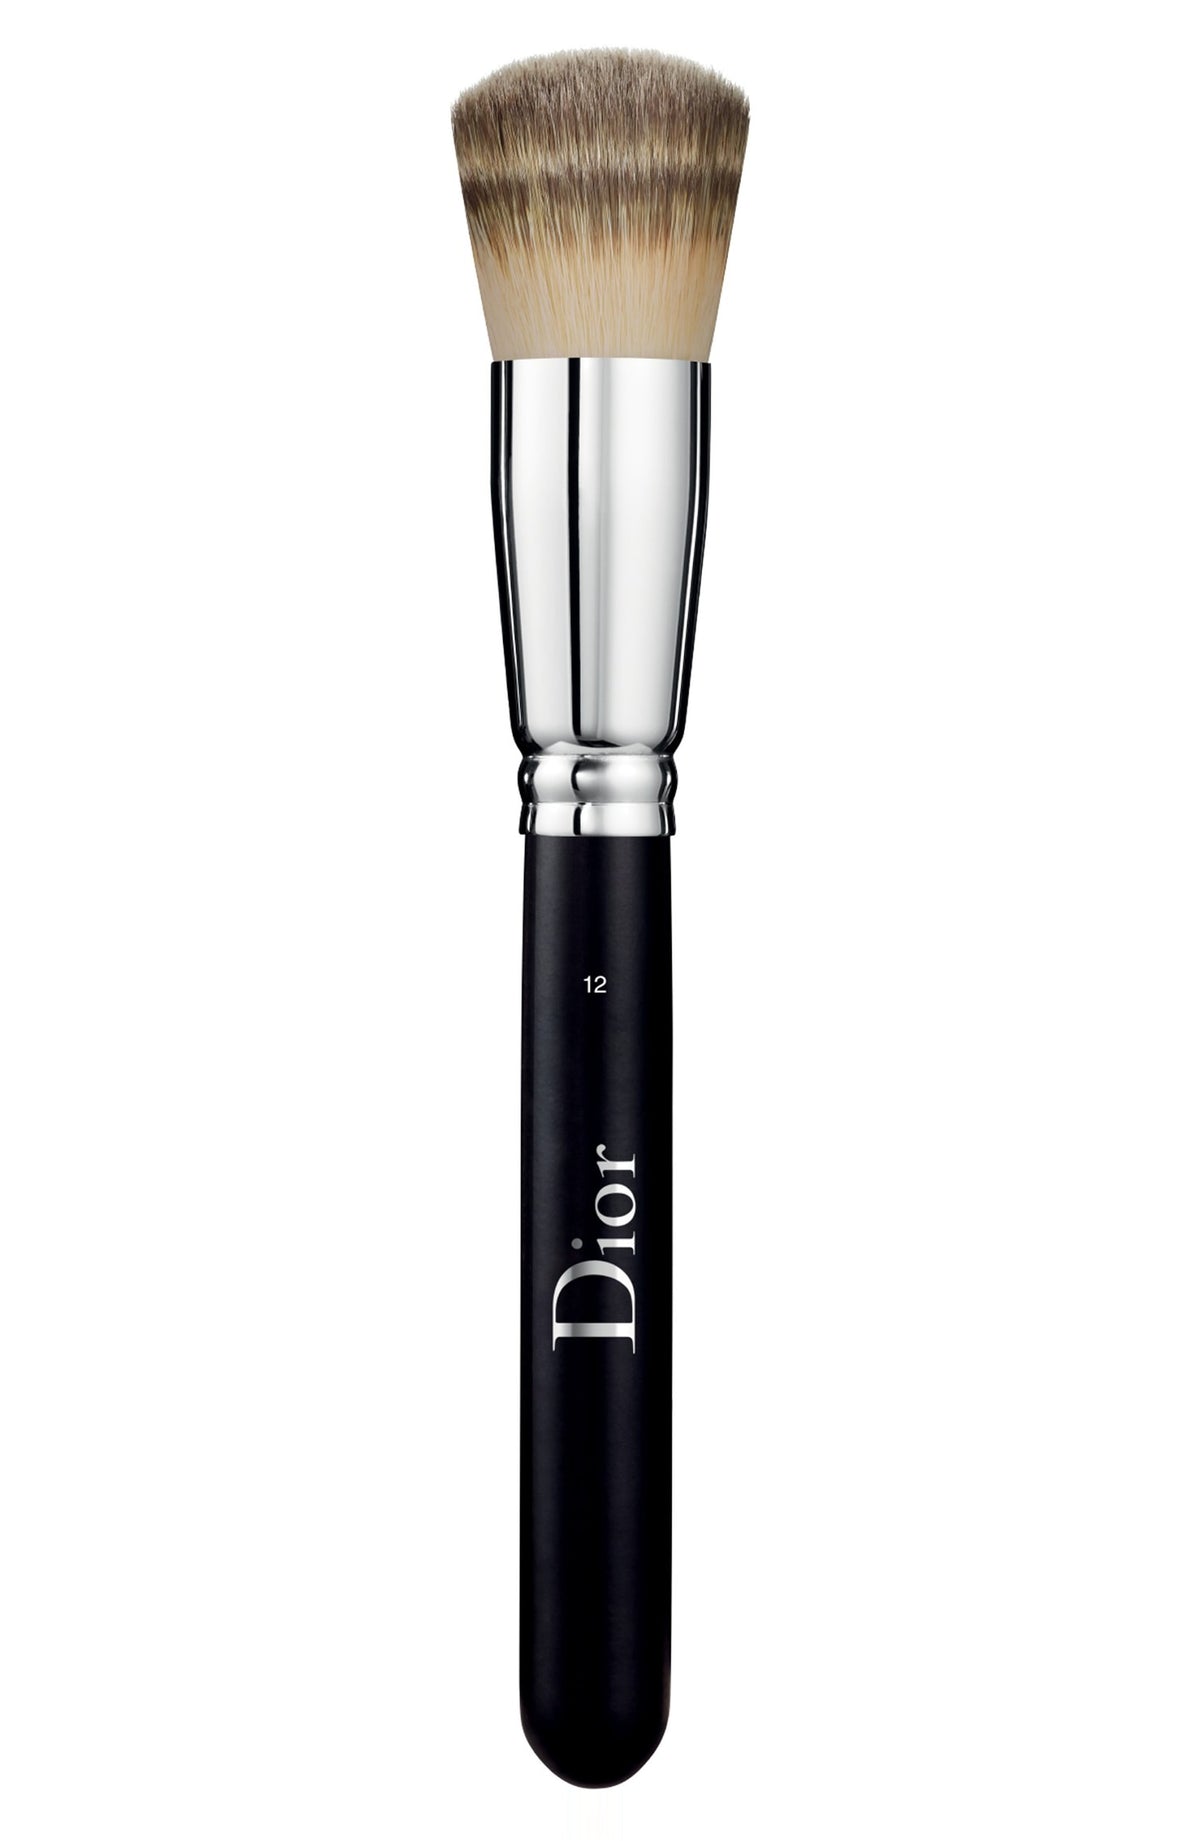 Dior Backstage Full Coverage Fluid Foundation Brush N° 12